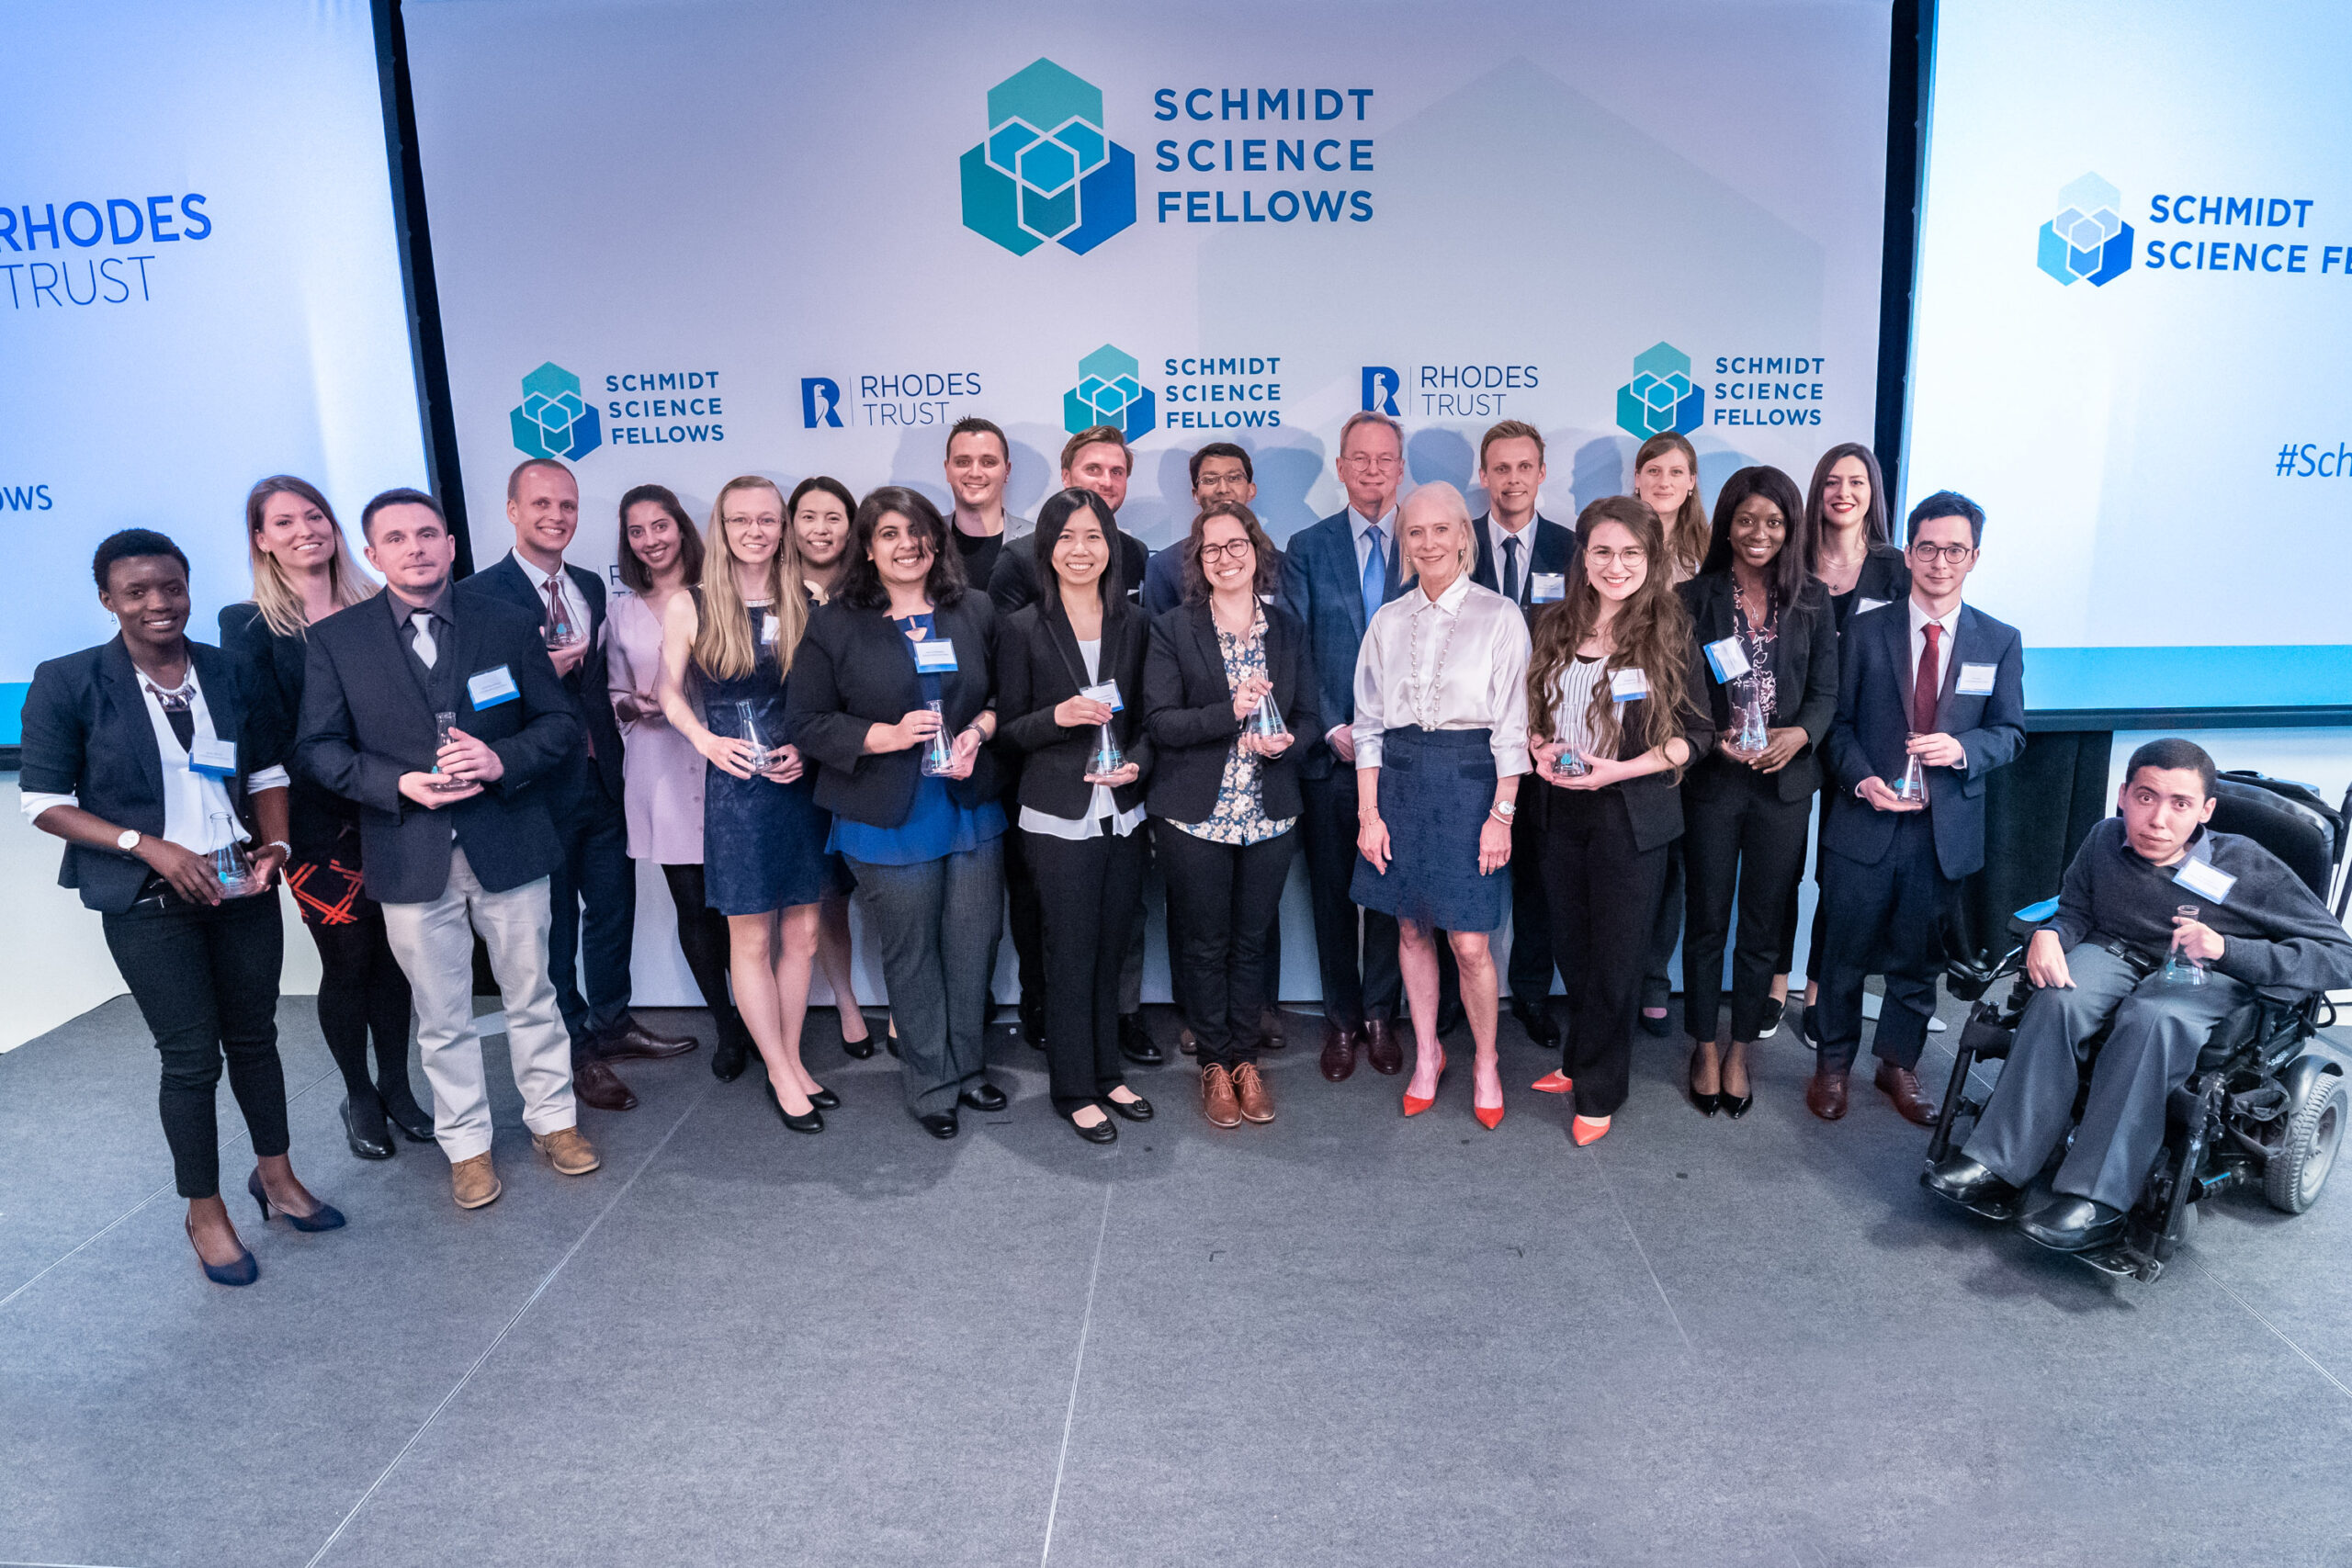 The 2019 Class of Schmidt Science Fellows. Photo by Adam Schultz. 